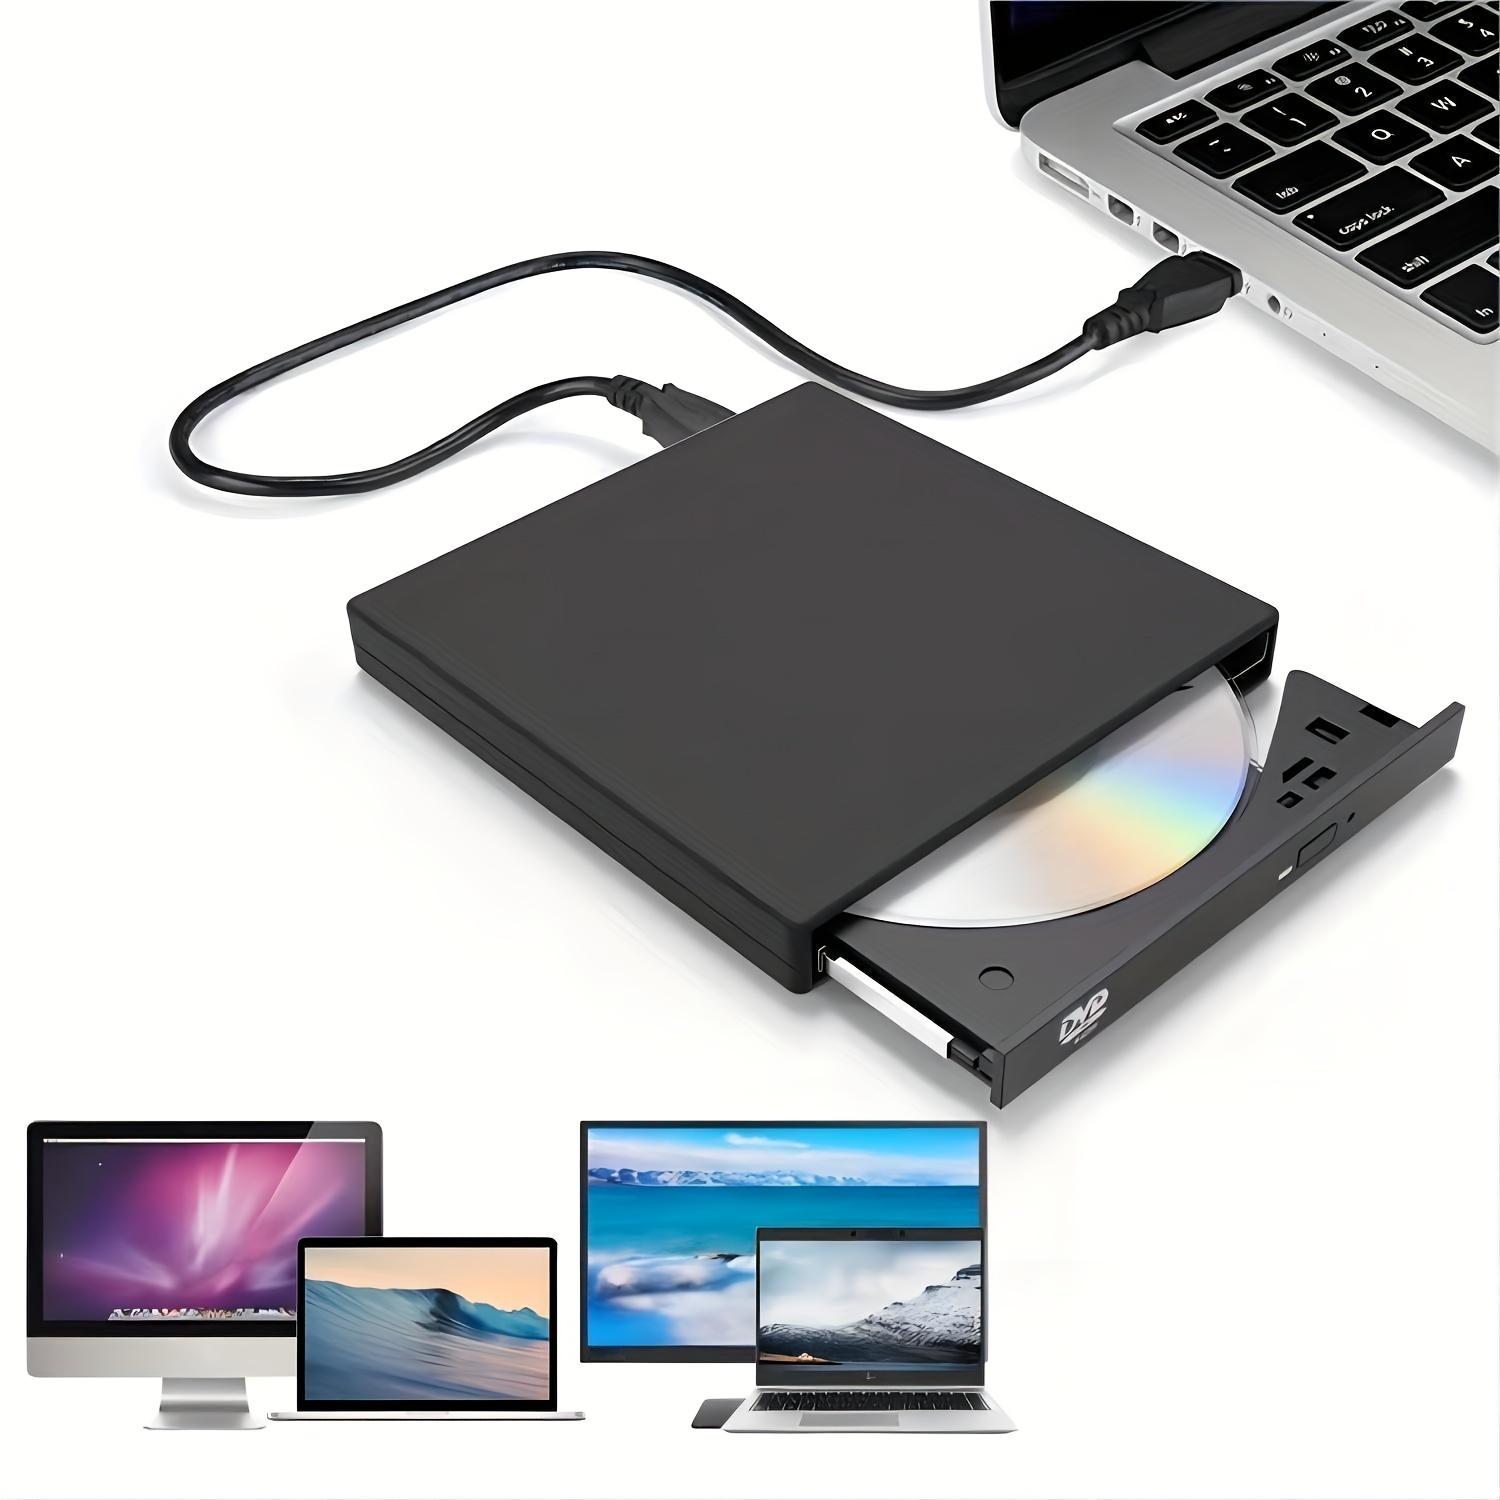 Buy External CD DVD Drive USB 2.0 Slim Protable for PC & Laptop